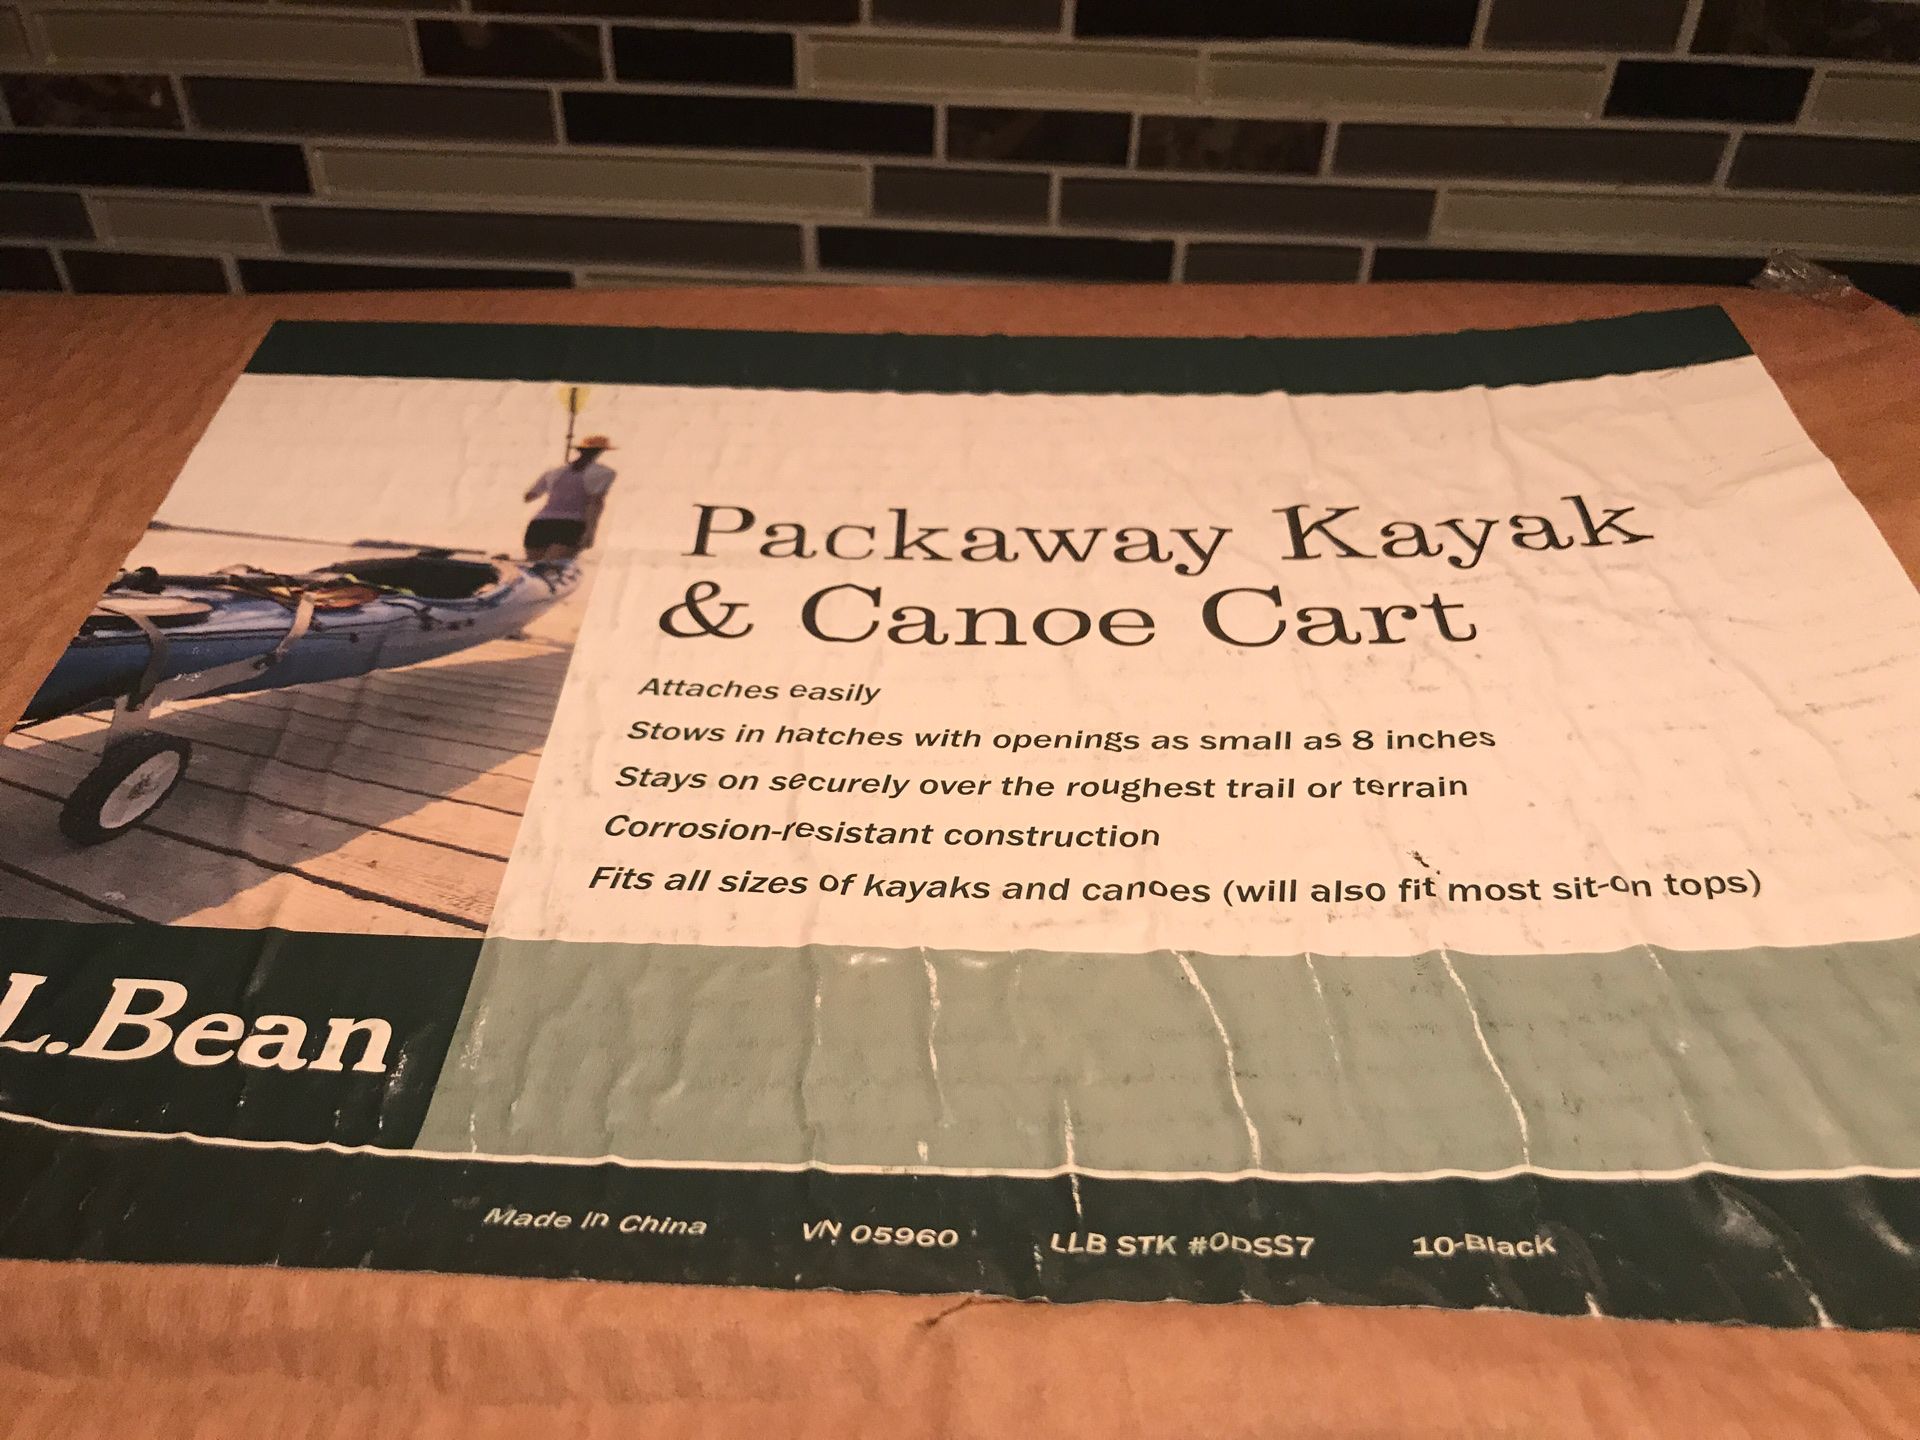 New in Box Packaway Kayak and Canoe Cart